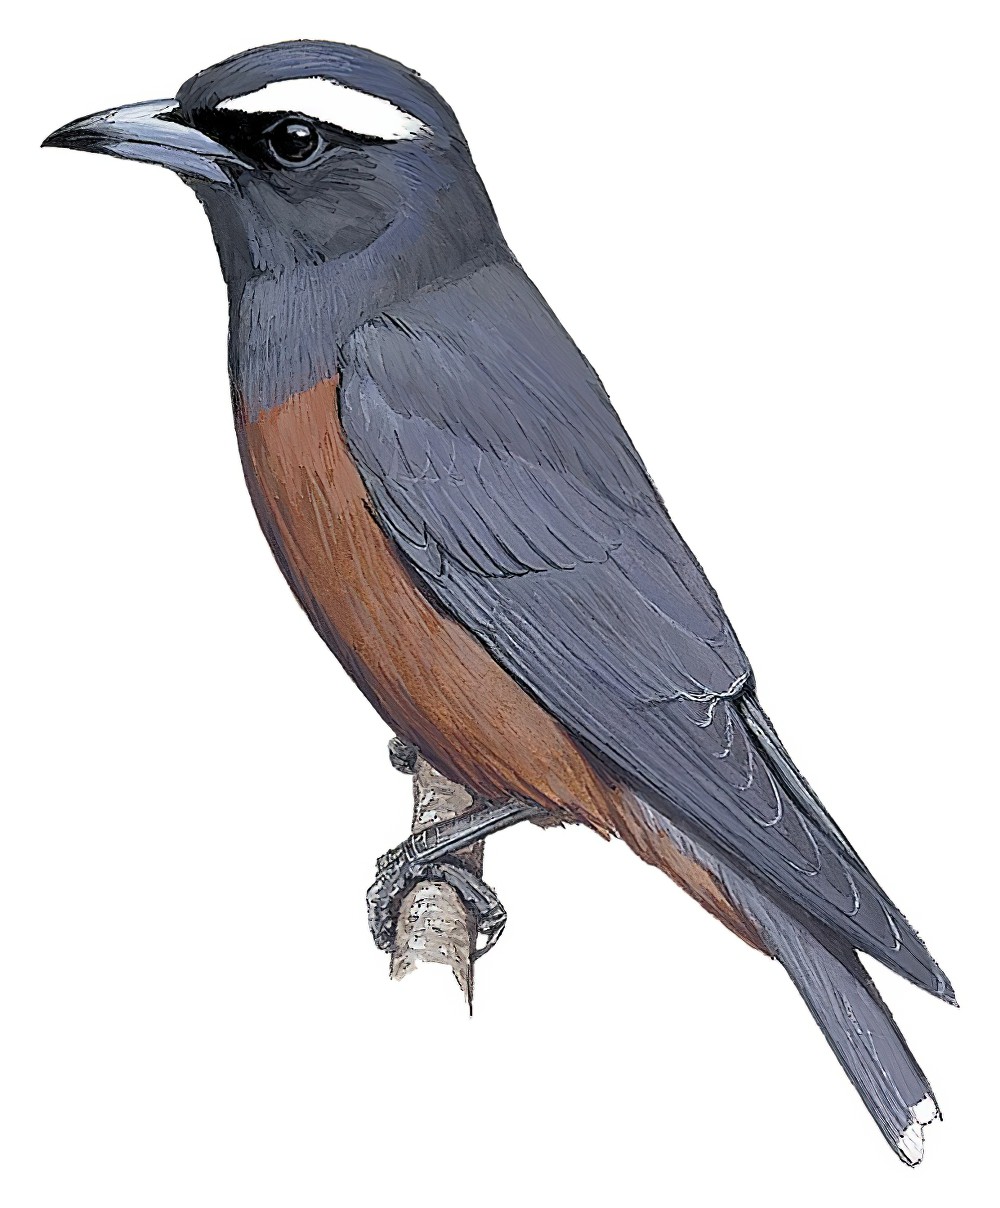 White-browed Woodswallow / Artamus superciliosus